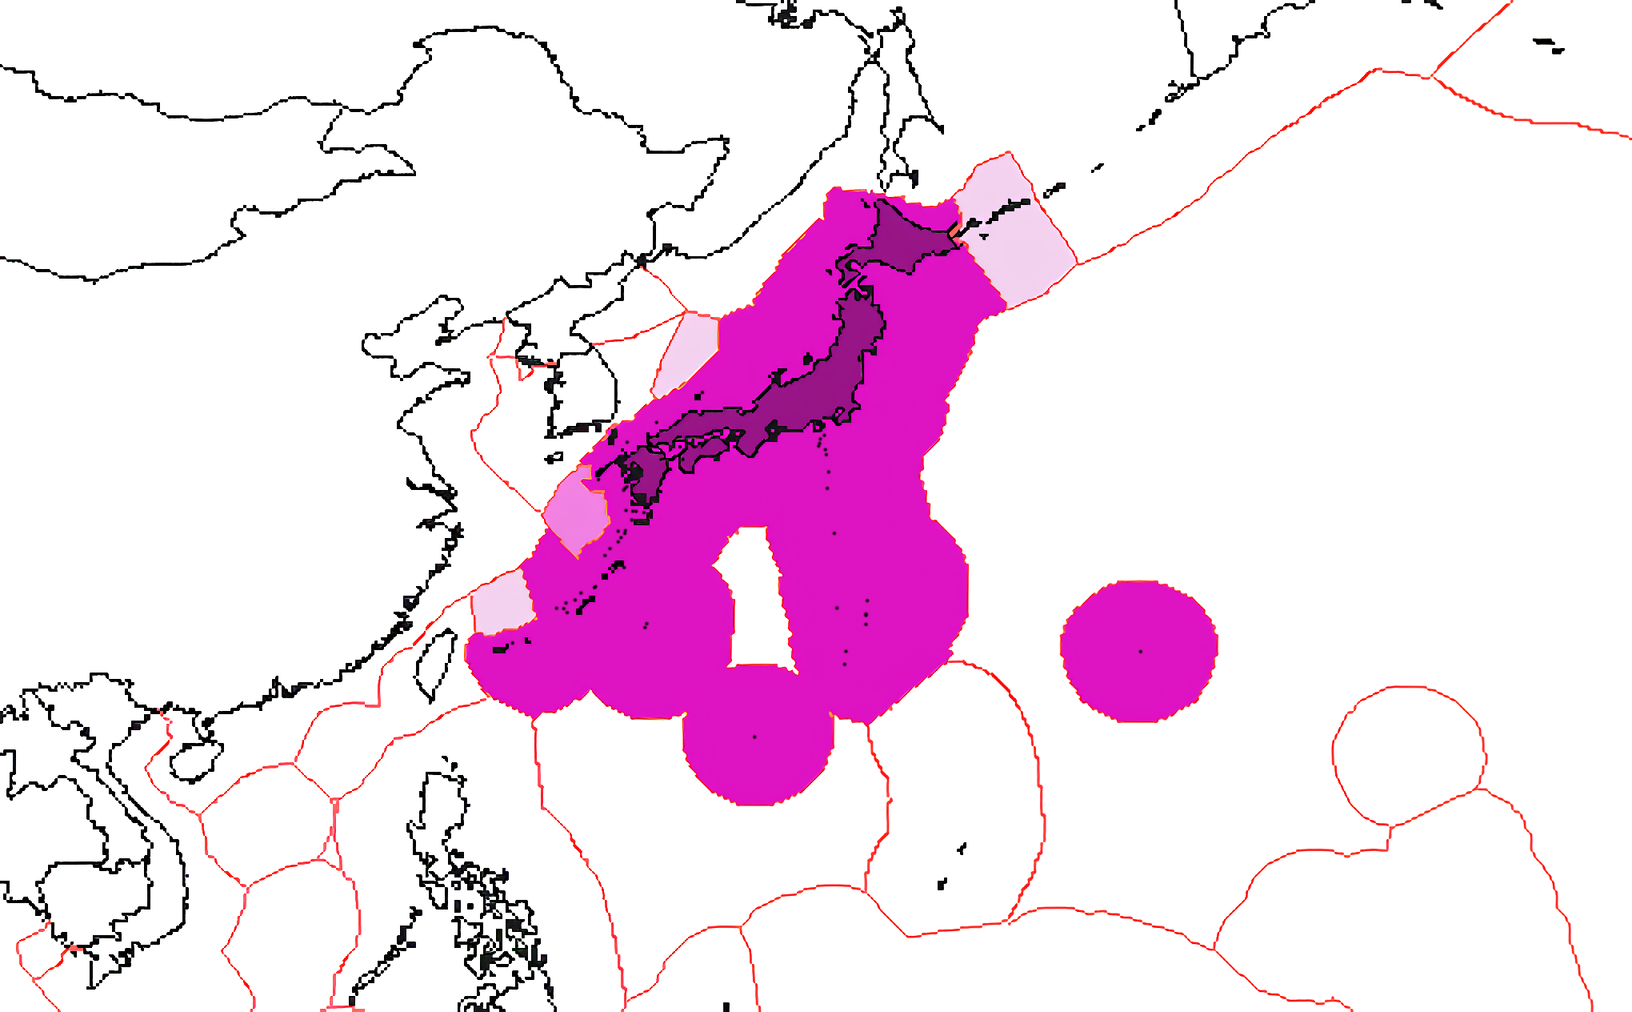 Exclusive economic zone of Japan - Wikipedia